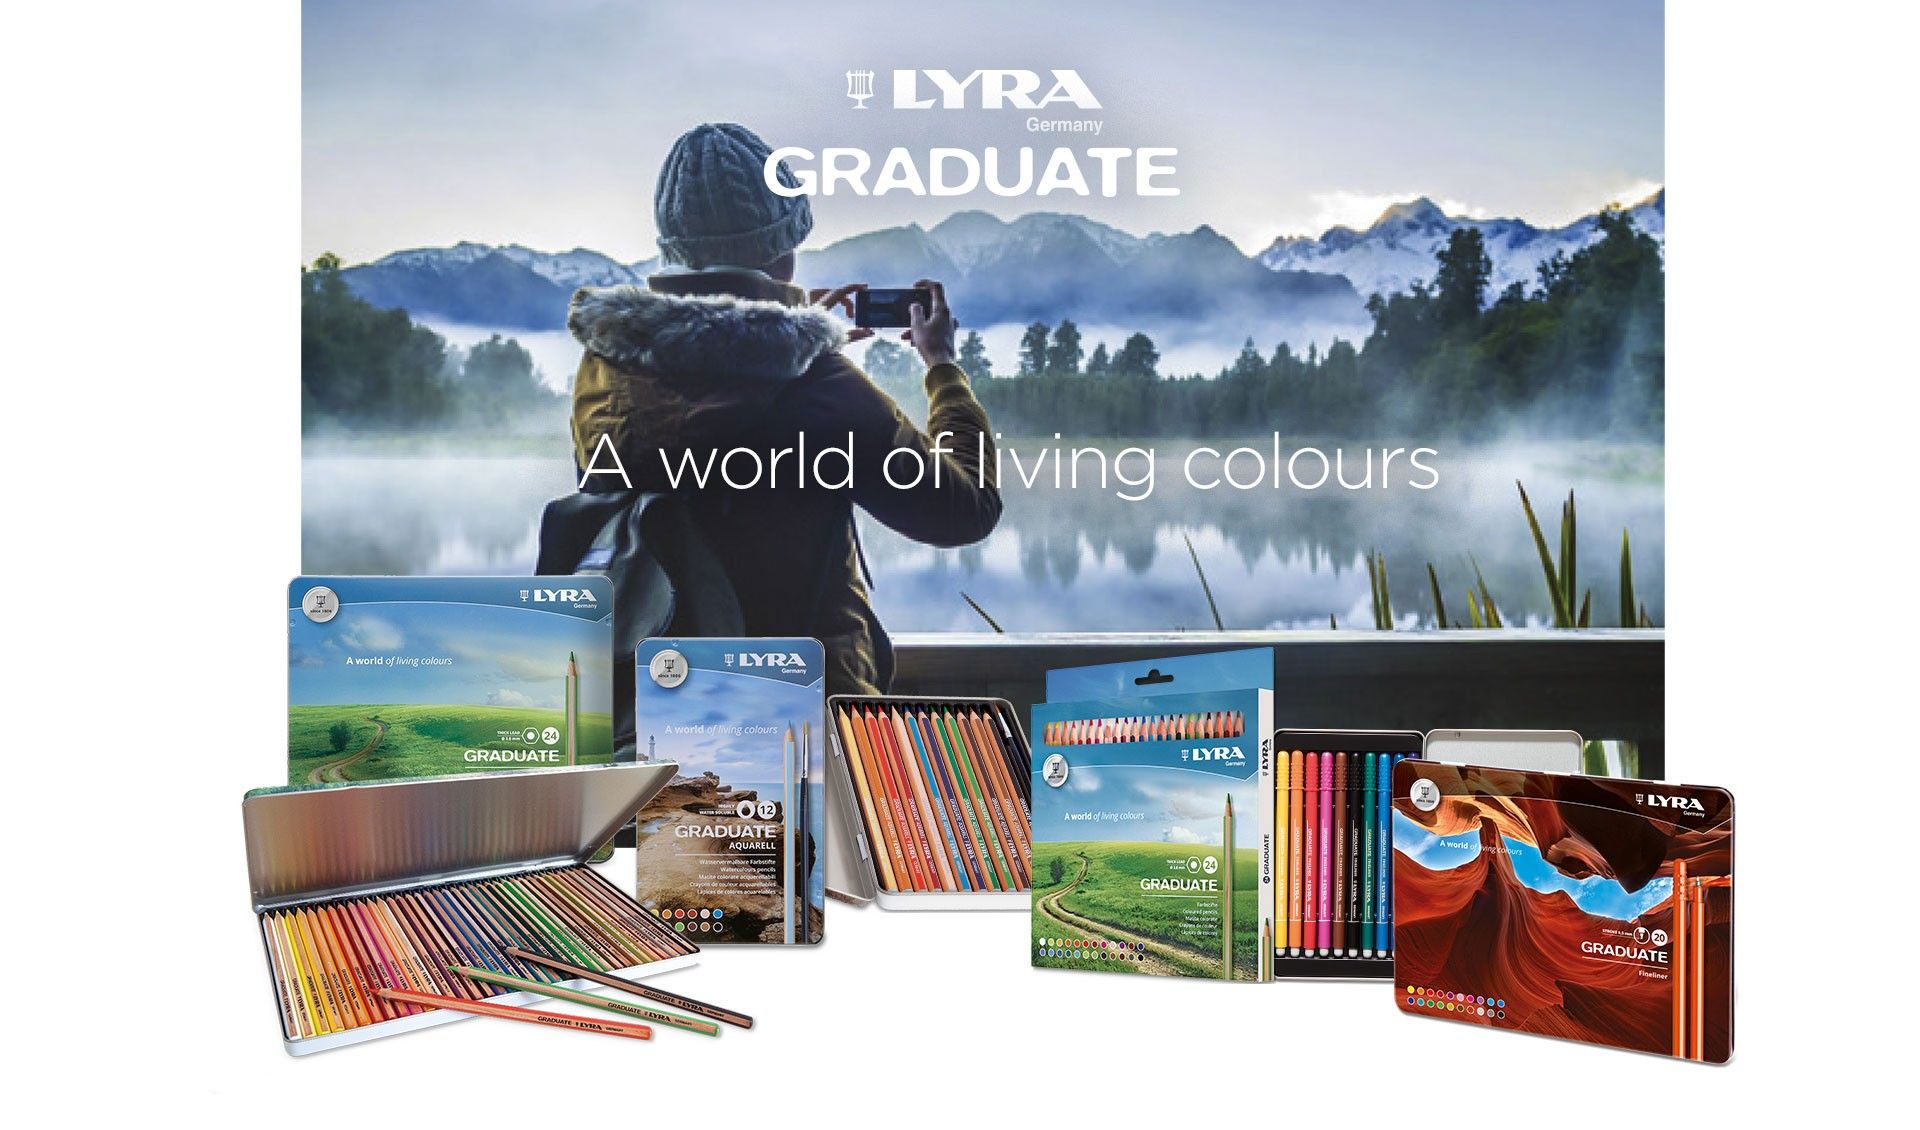 Lyra Graduate - A world of living colours